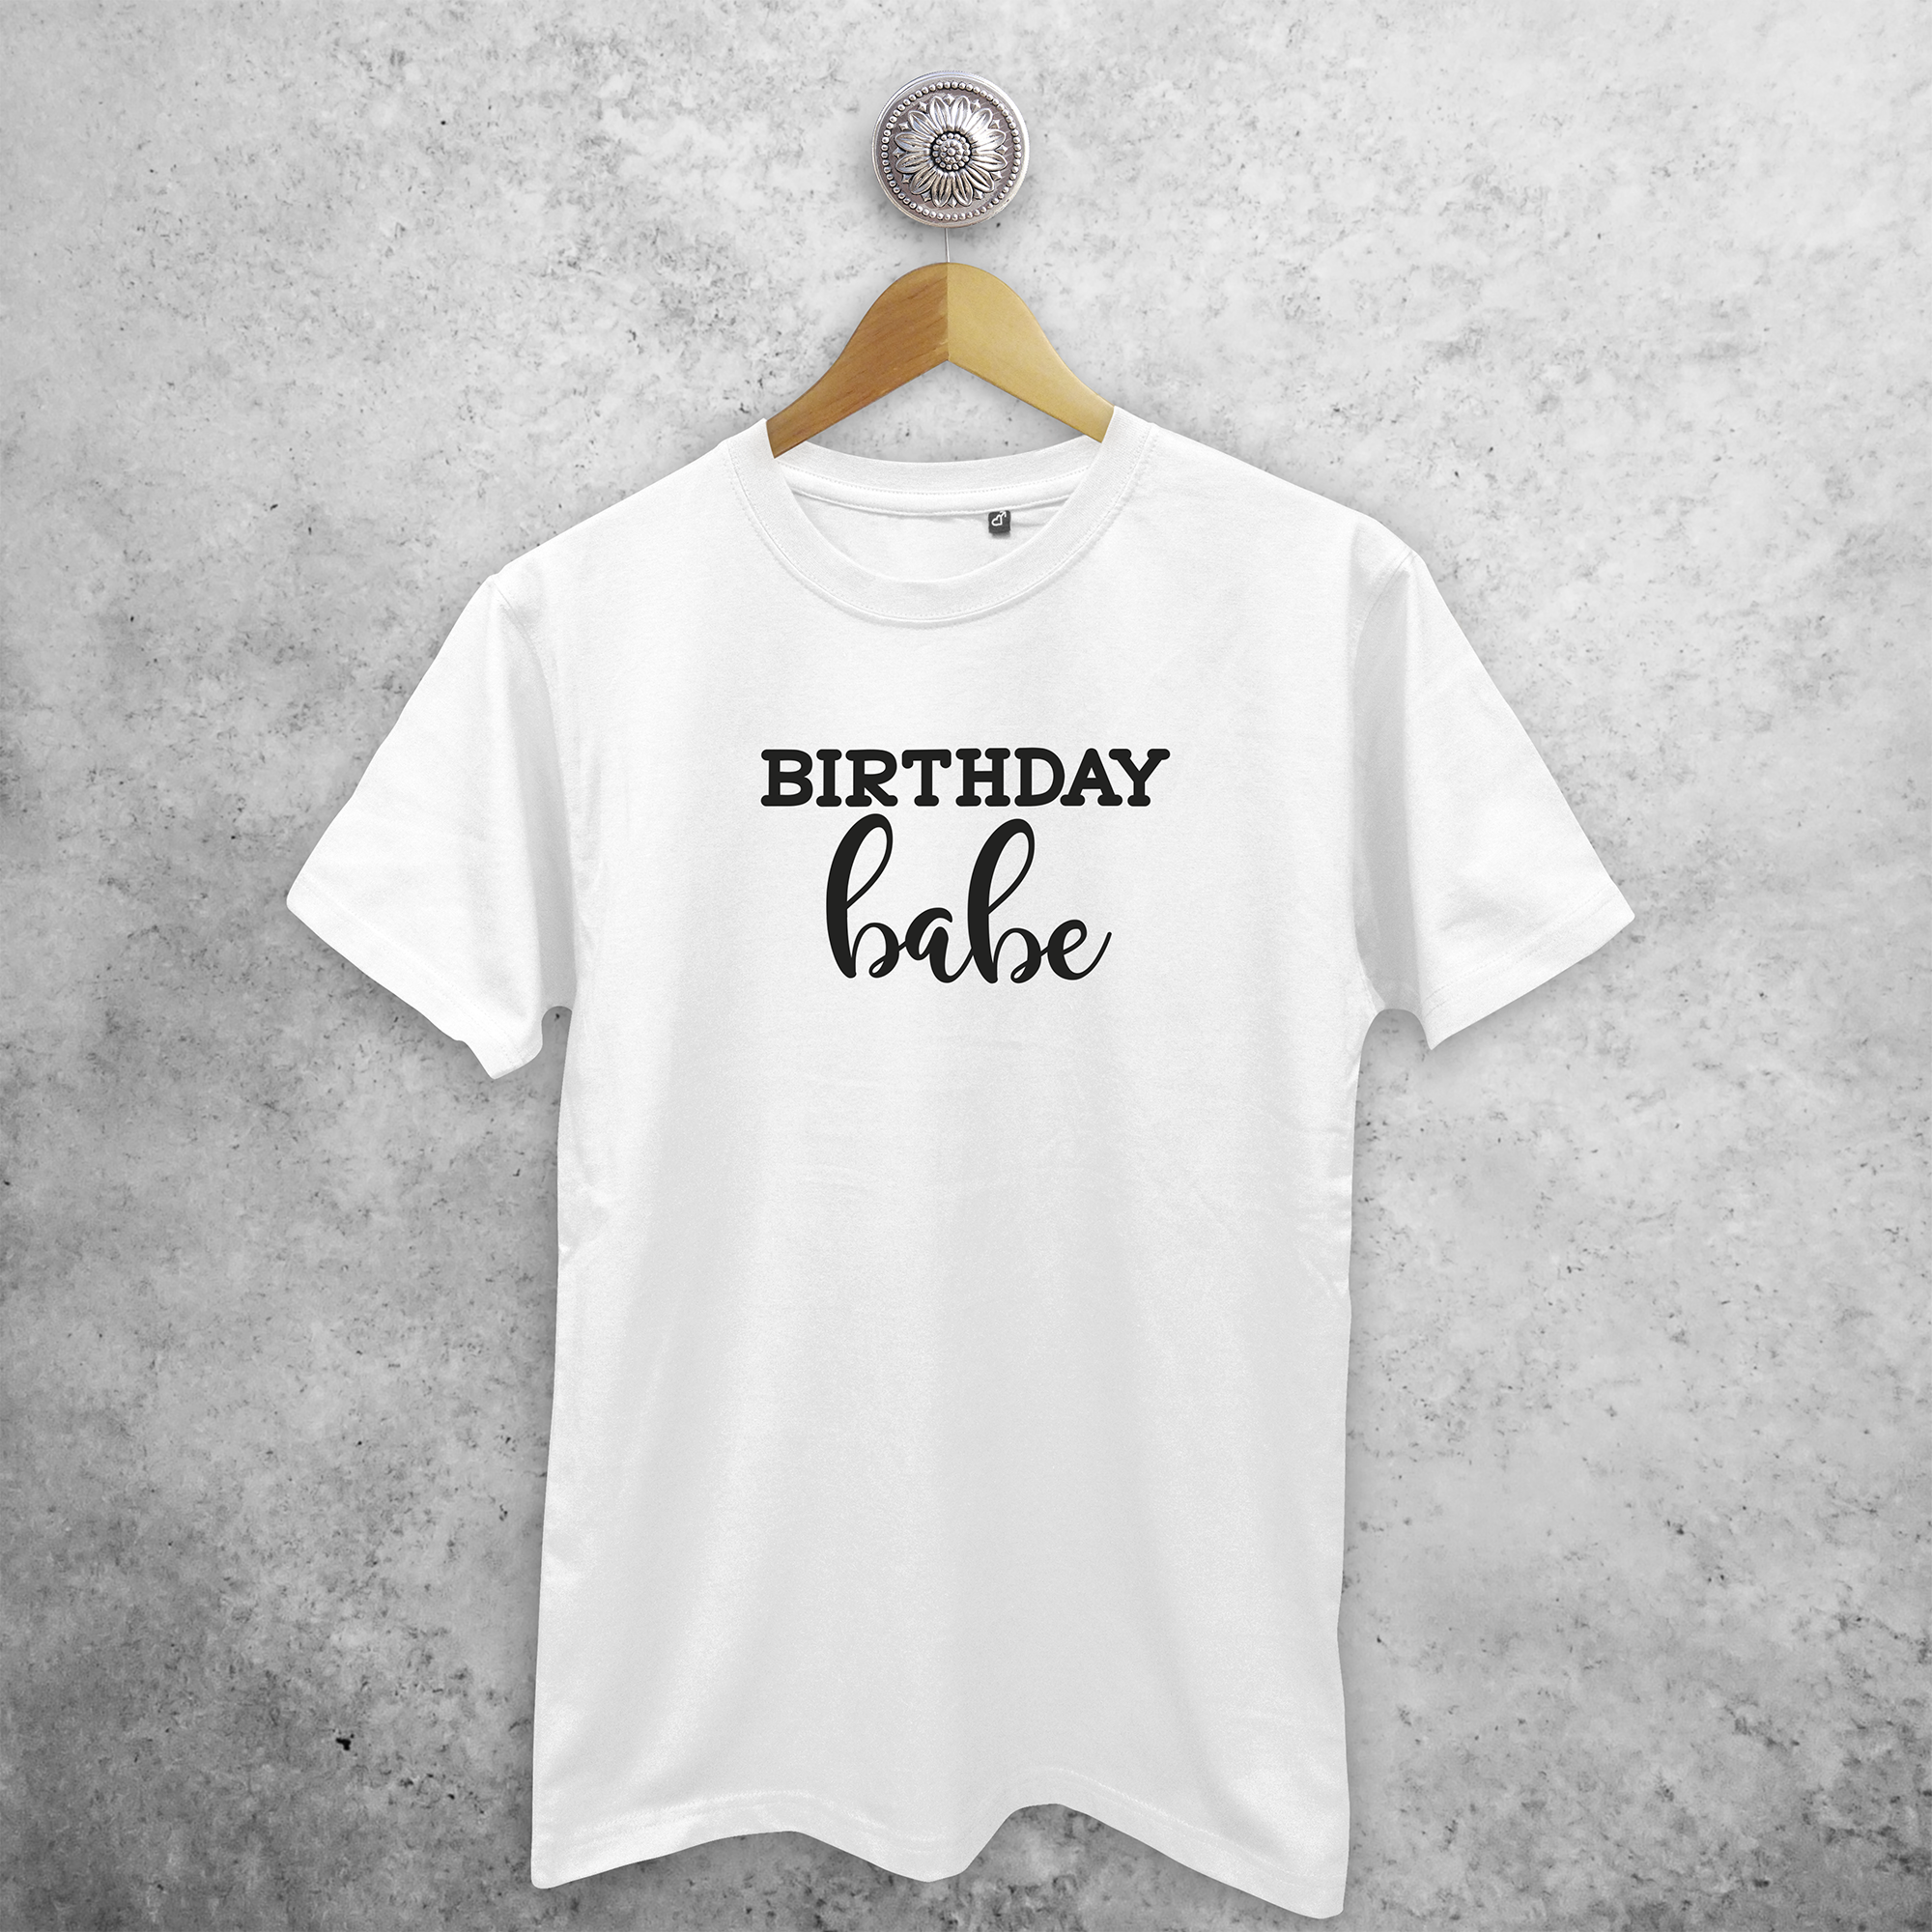 'Birthday babe' adult shirt